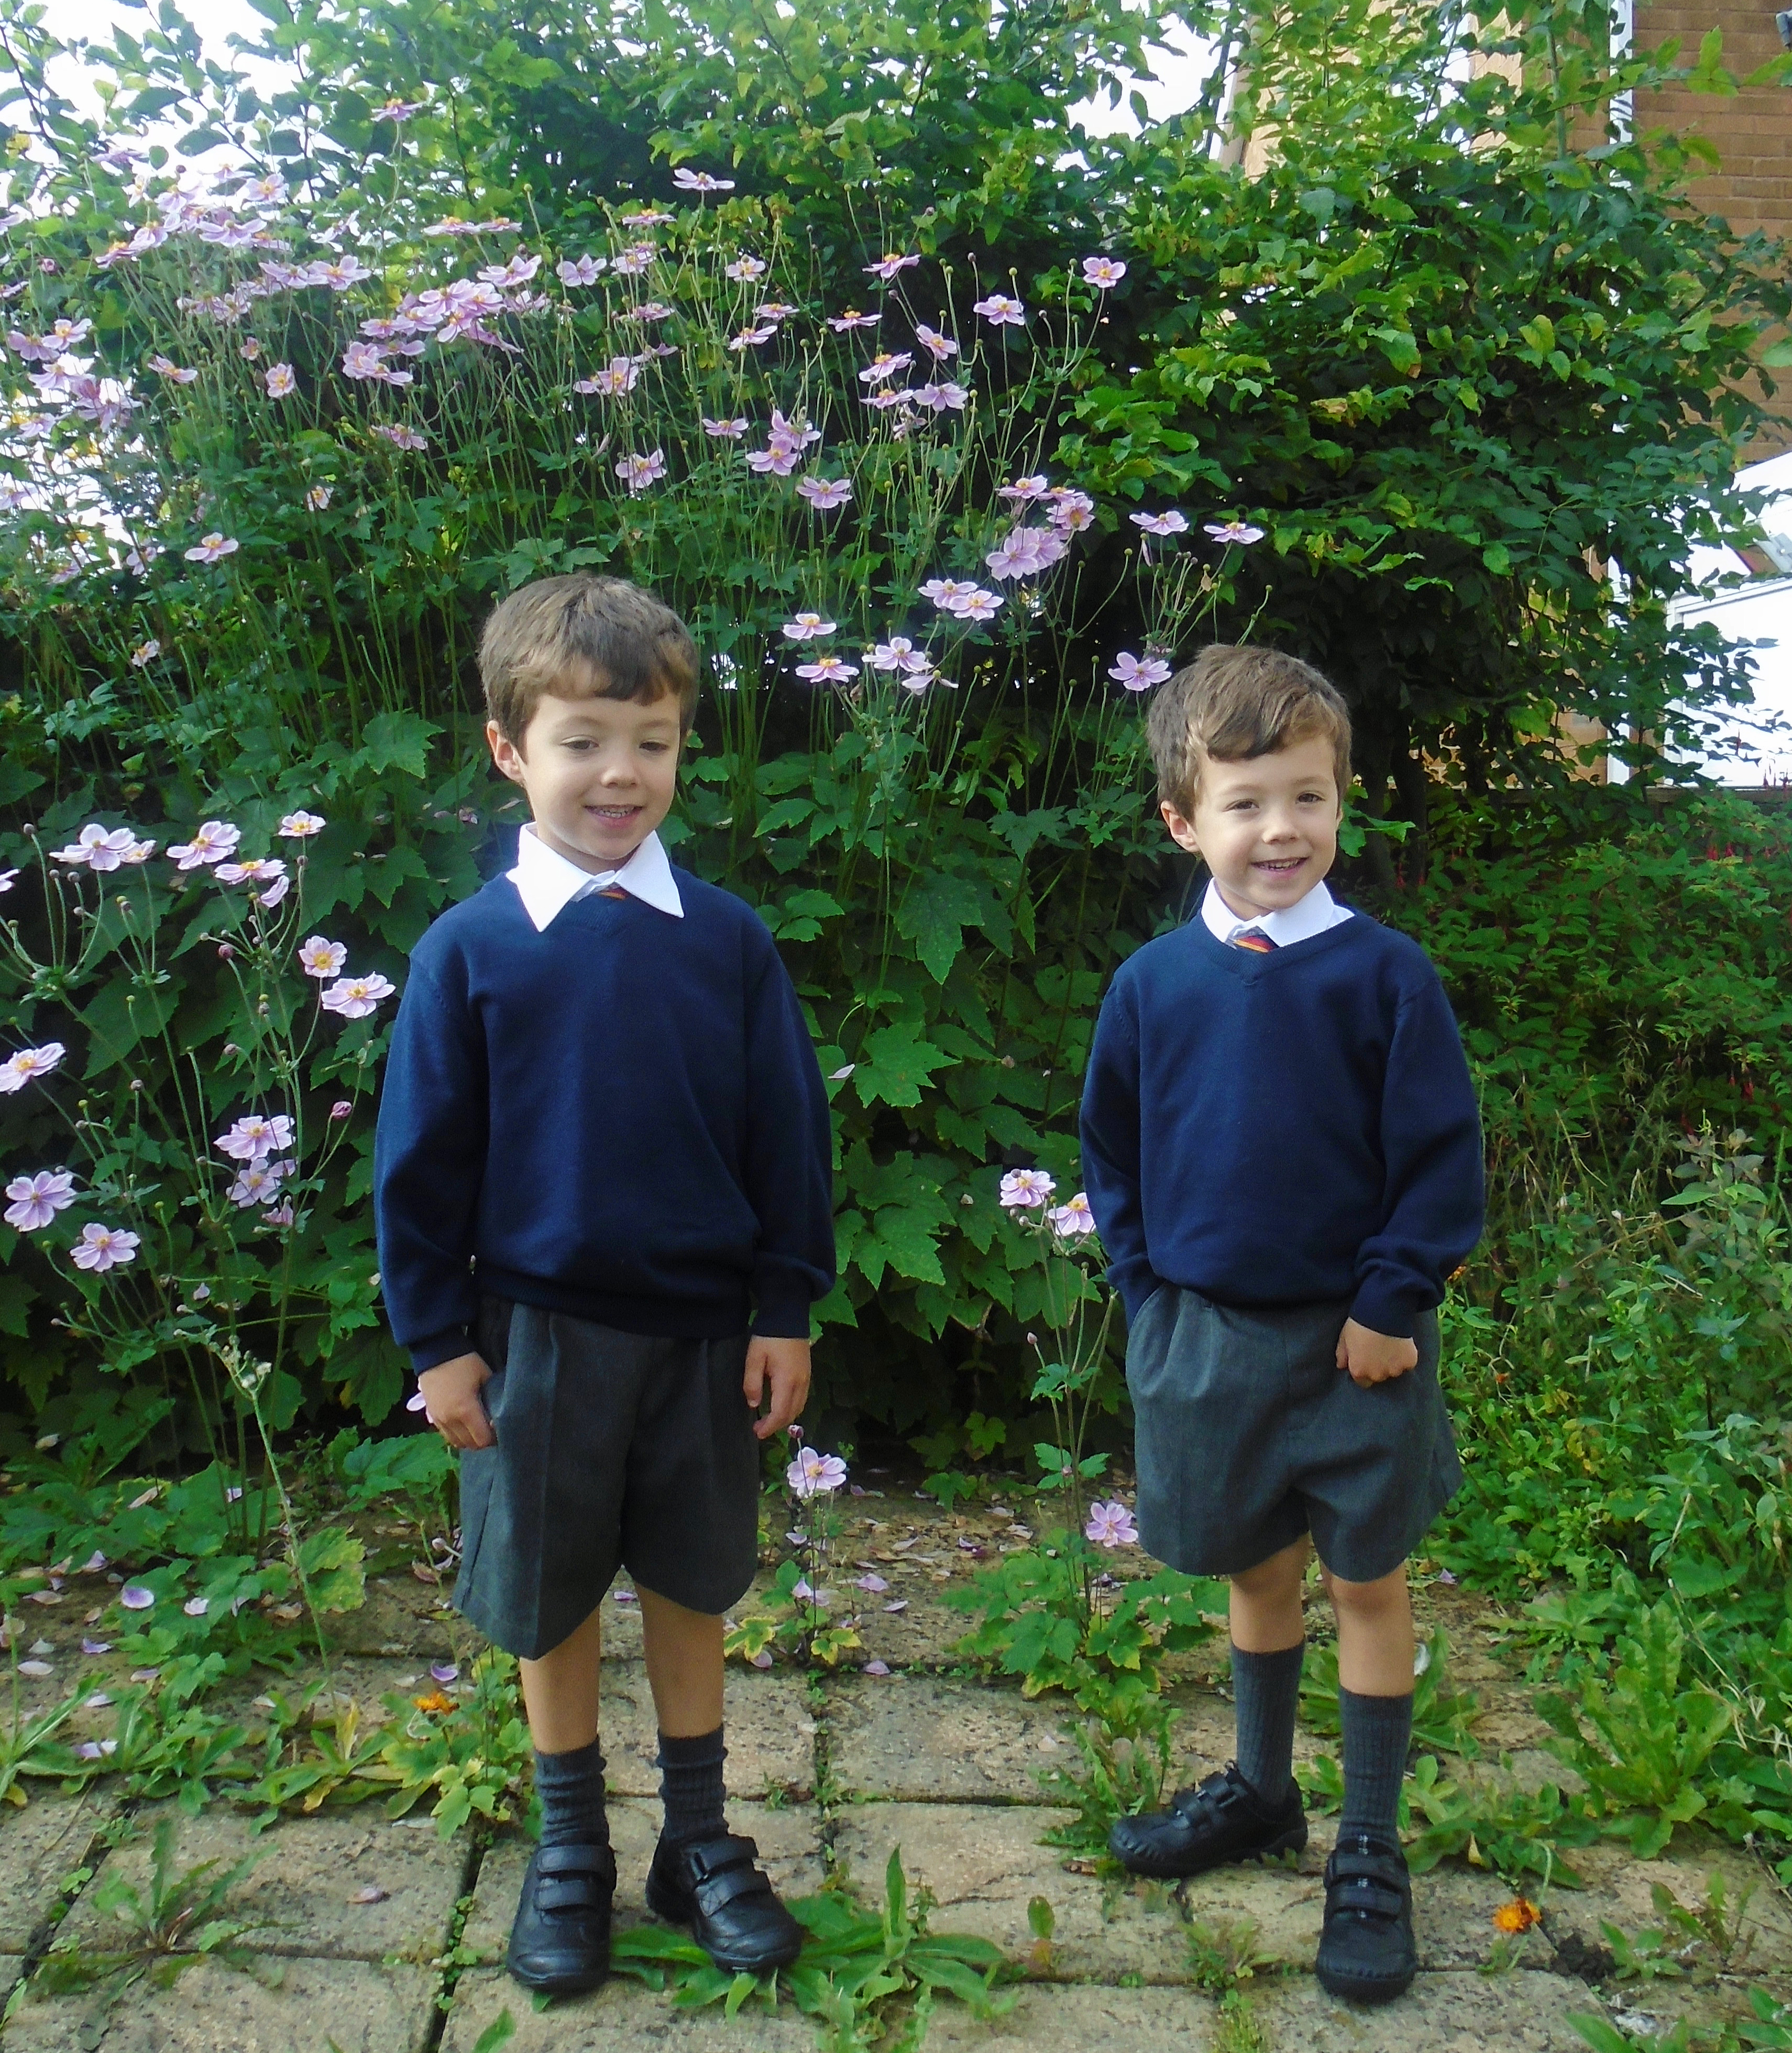 Getting twins ready to start school